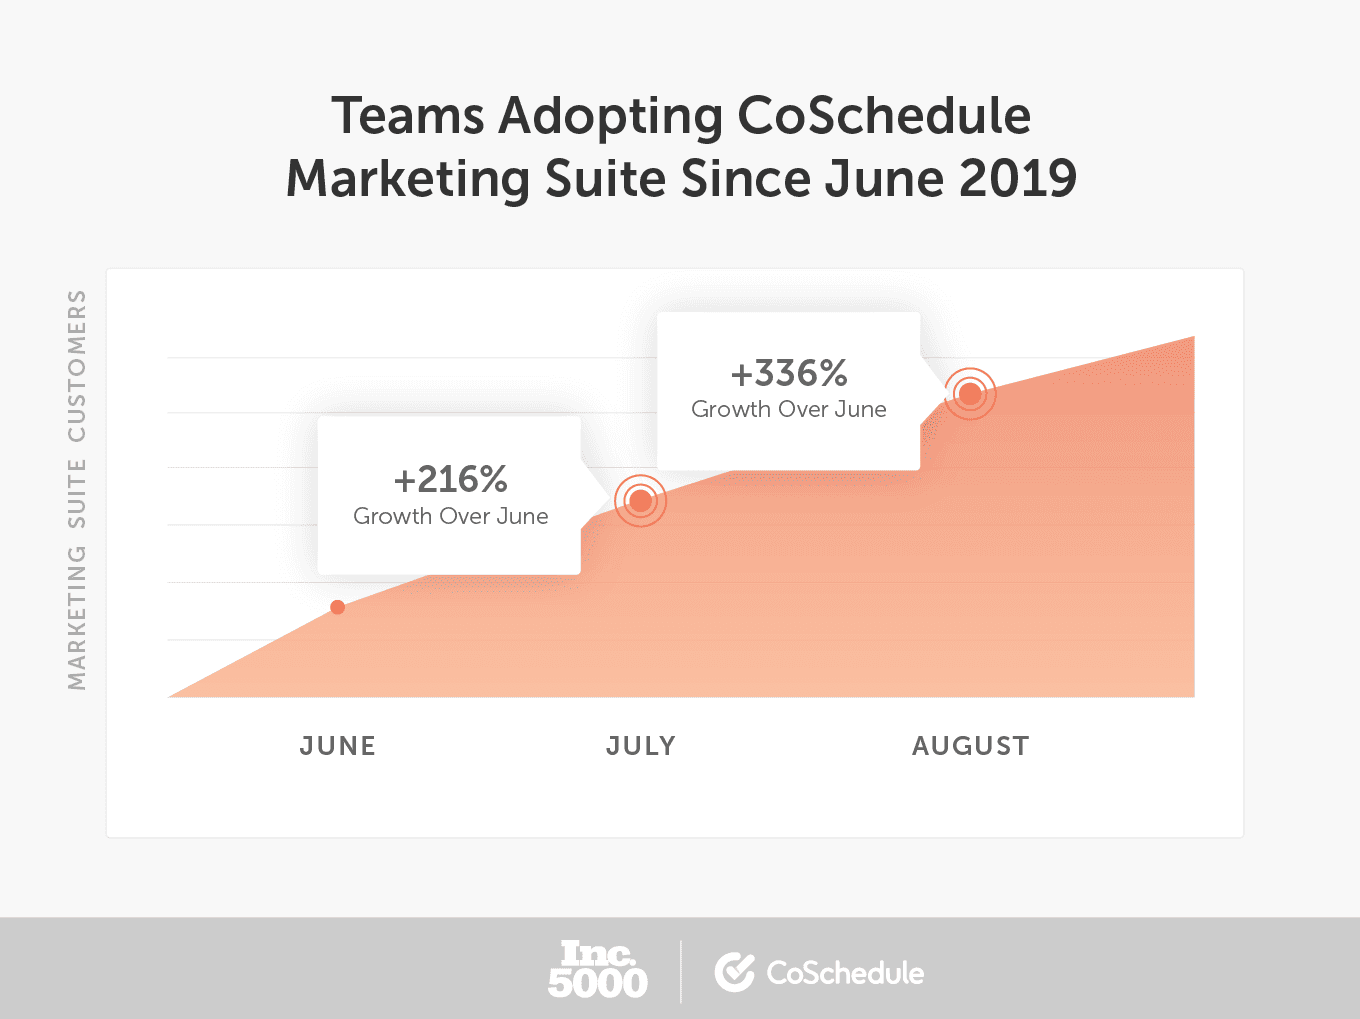 Teams adopting CoSchedule Marketing Suite since June 2019